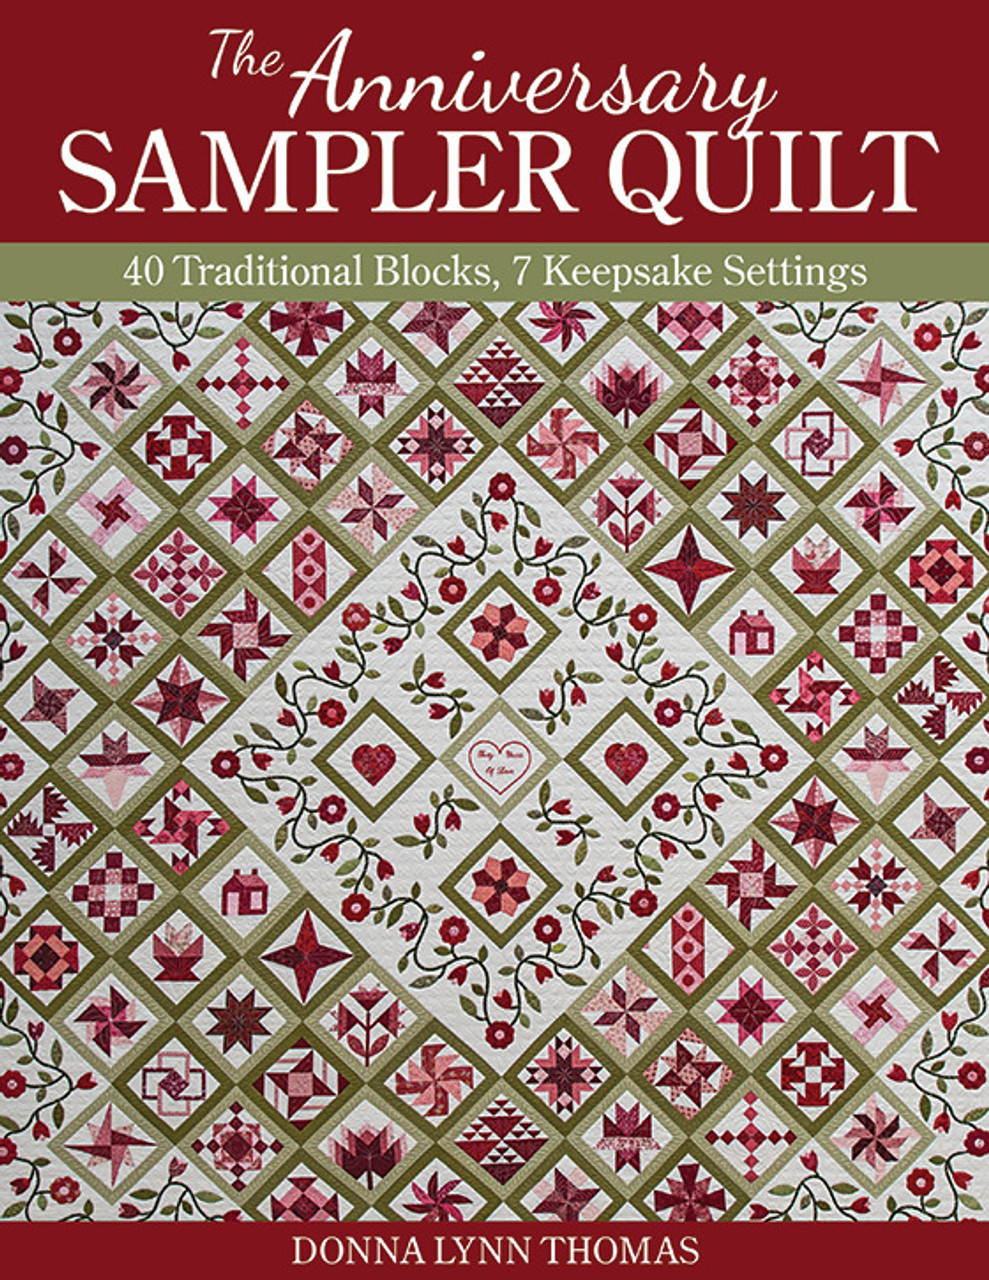 The Anniversary Sampler Quilt eBook: 40 Traditional Blocks, 7